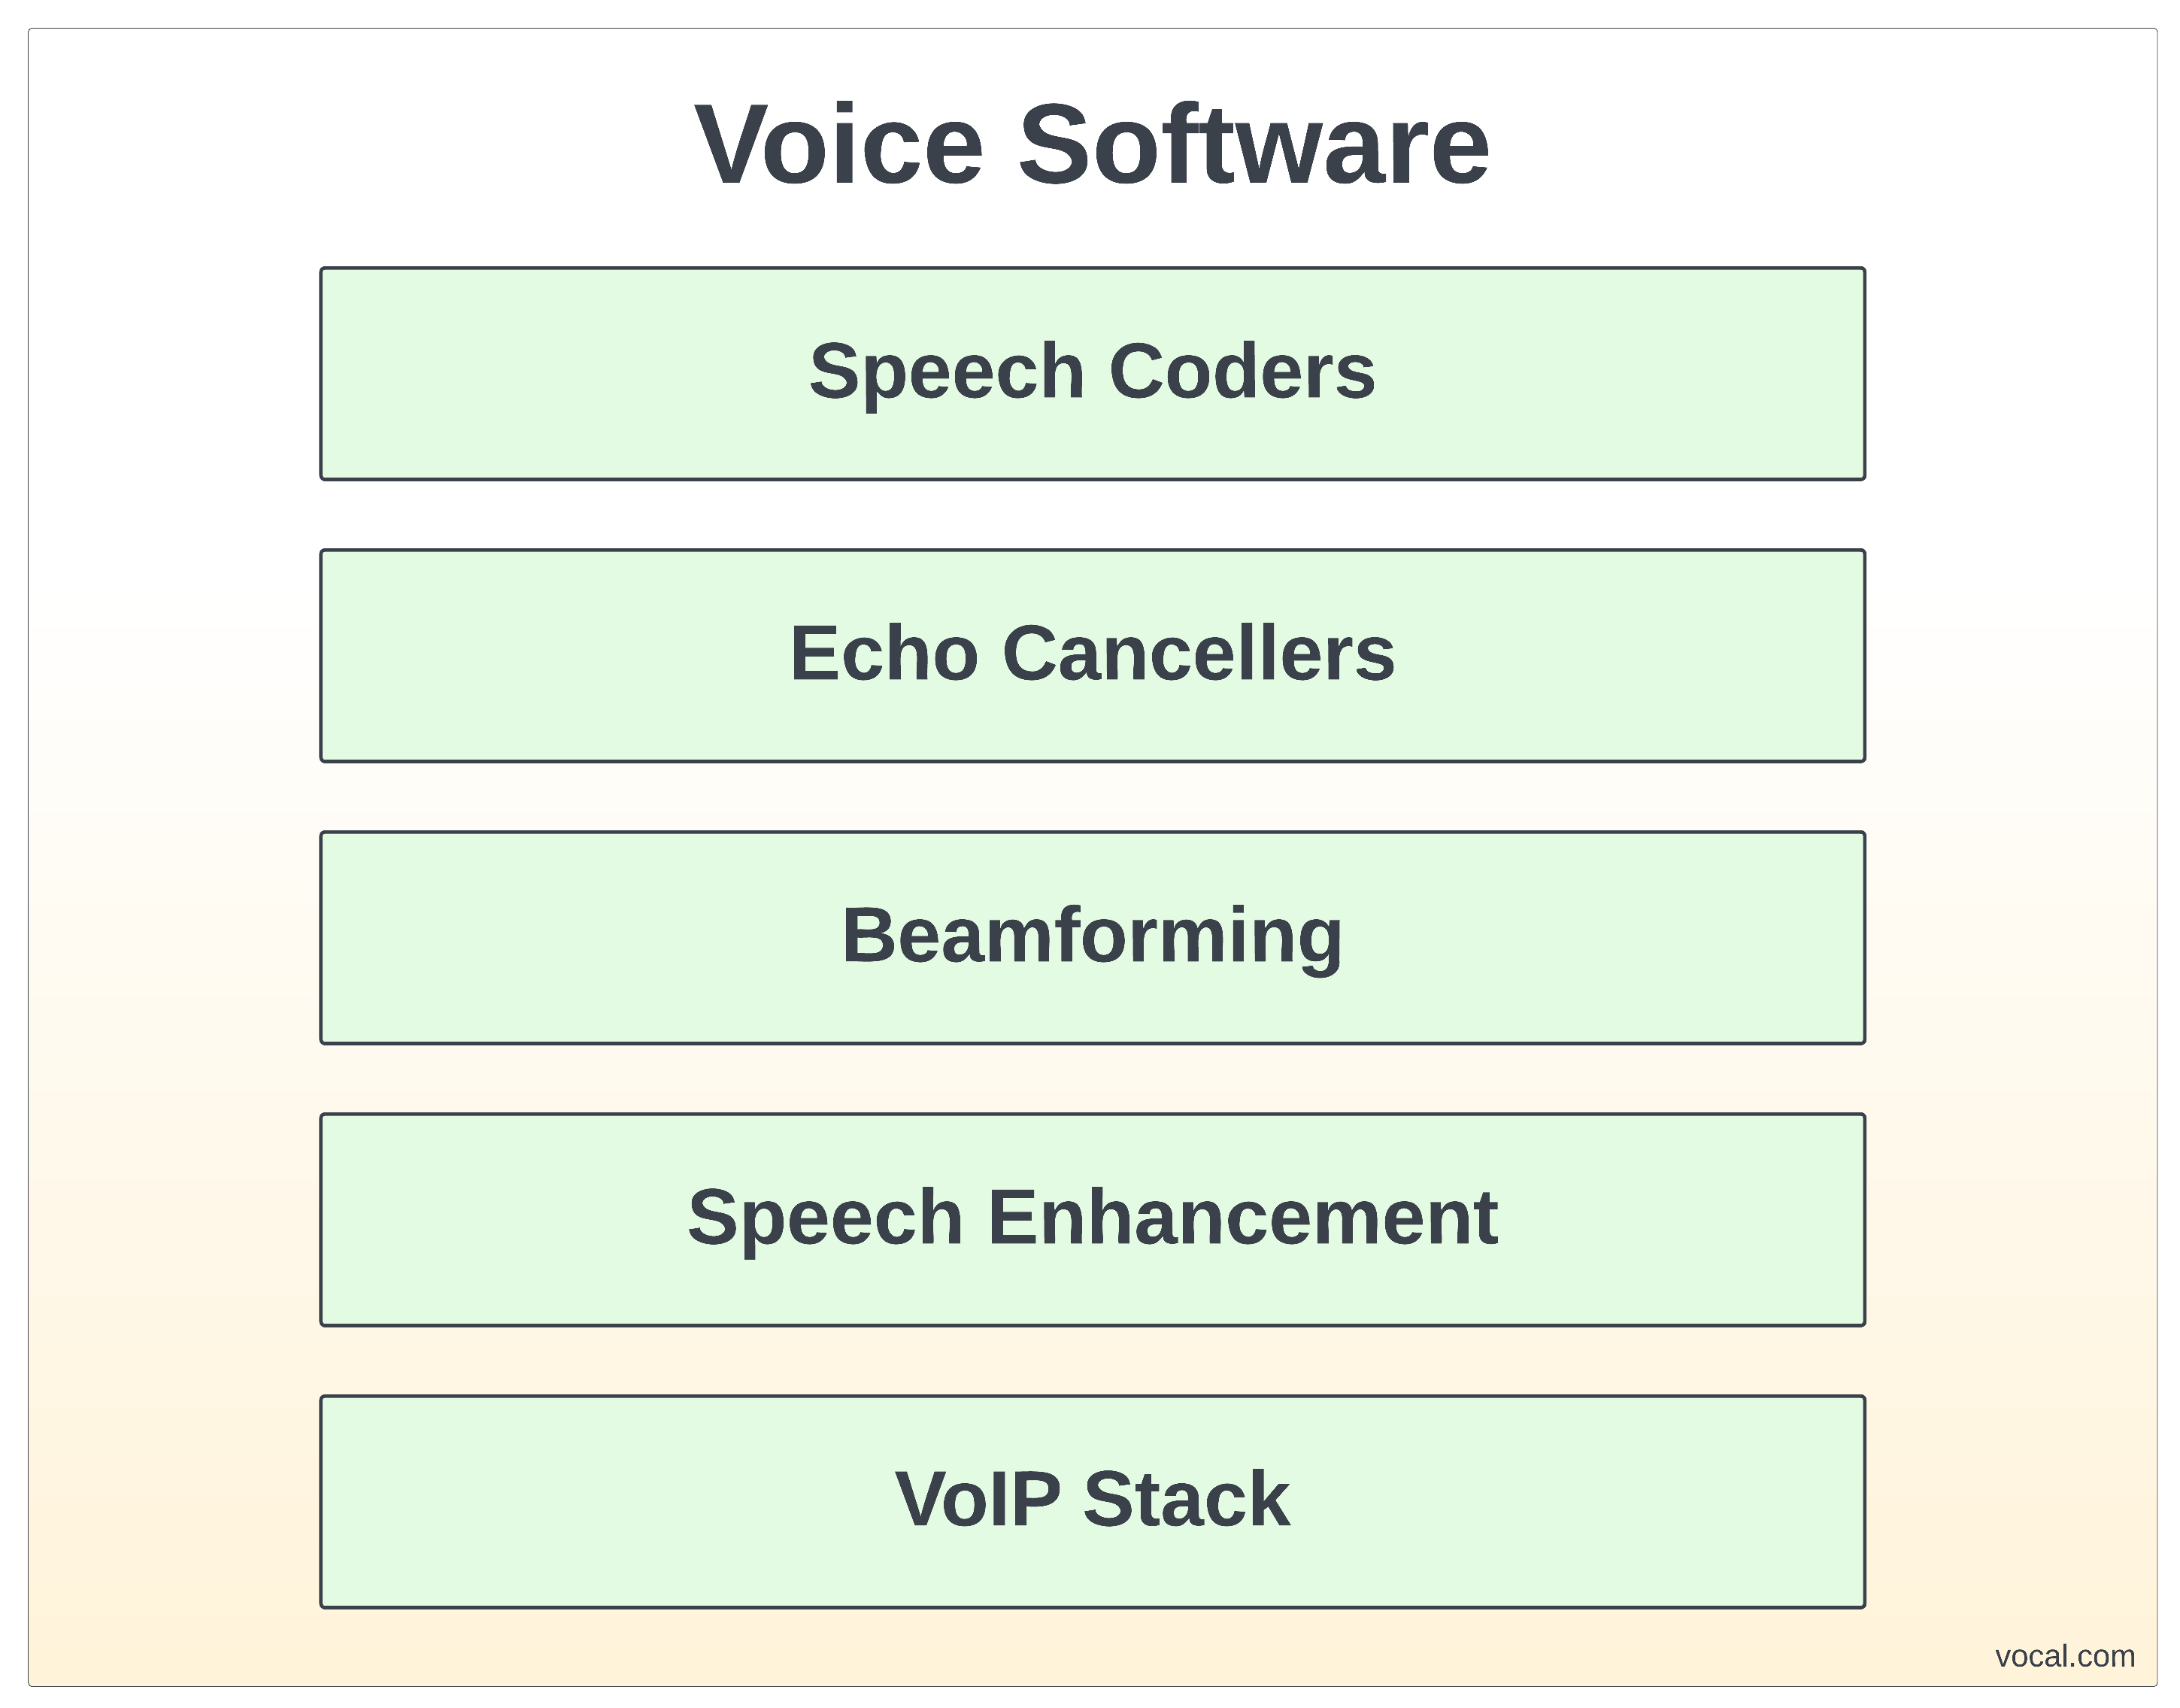 Voice Software